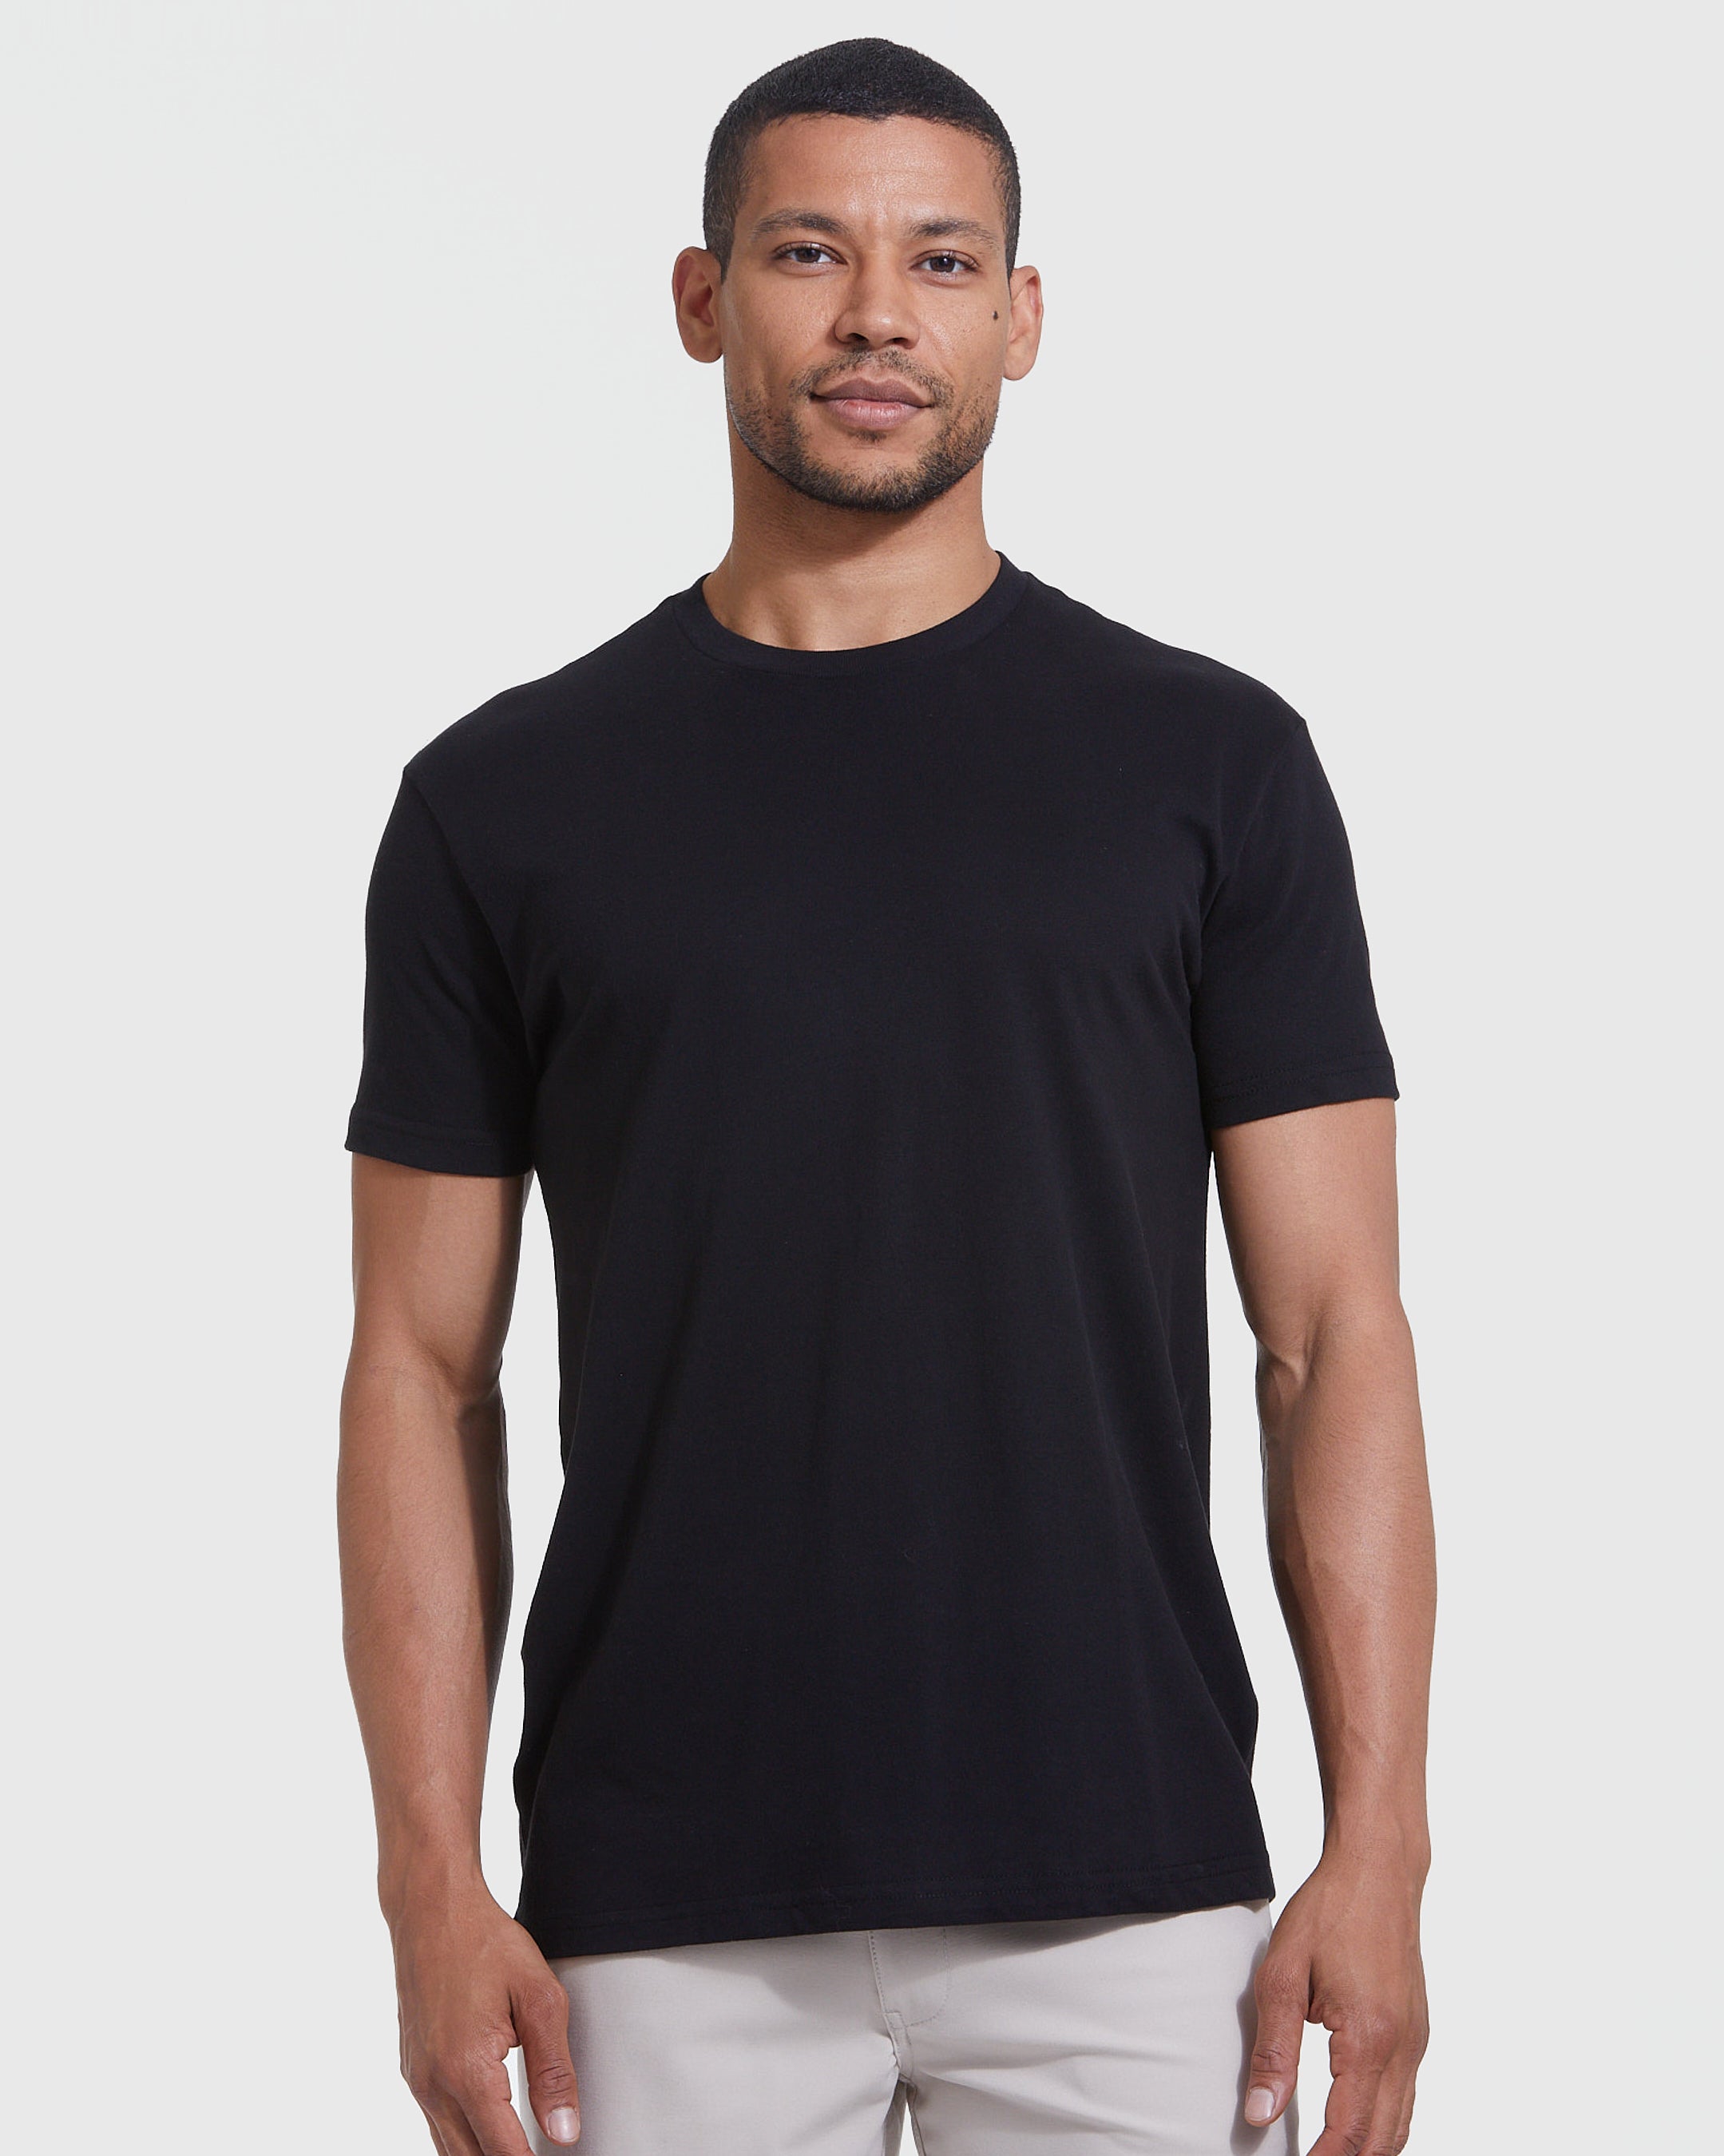 white sox-southside | Essential T-Shirt